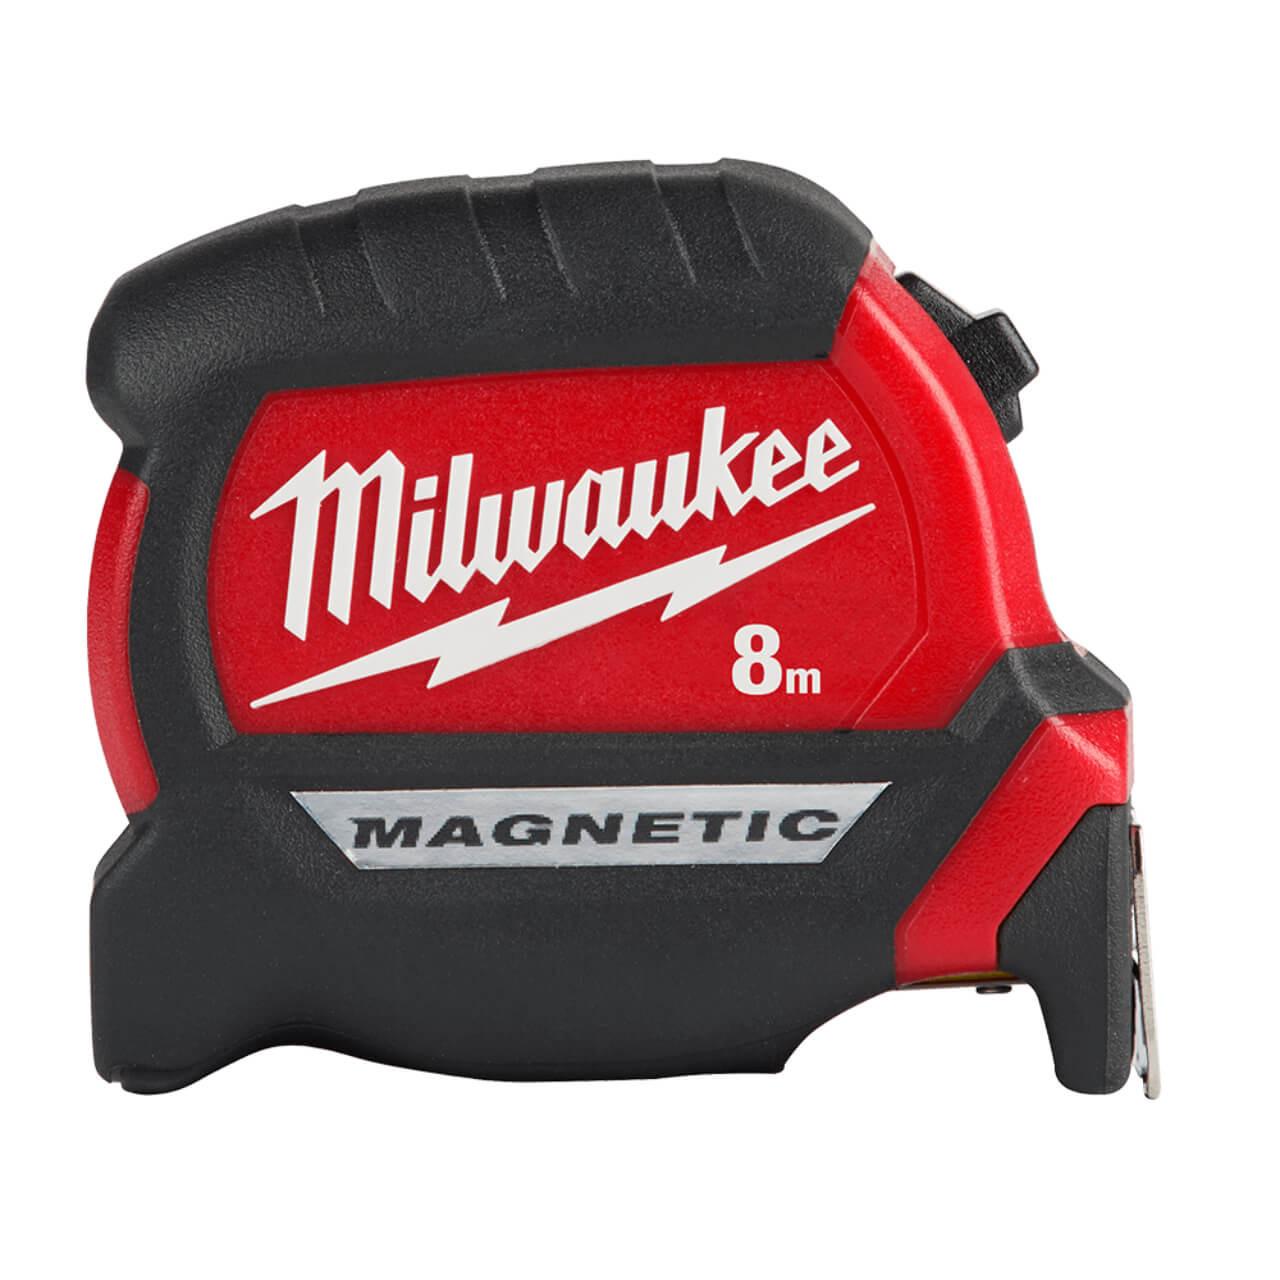 Milwaukee 8m Compact Magnetic Tape Measure